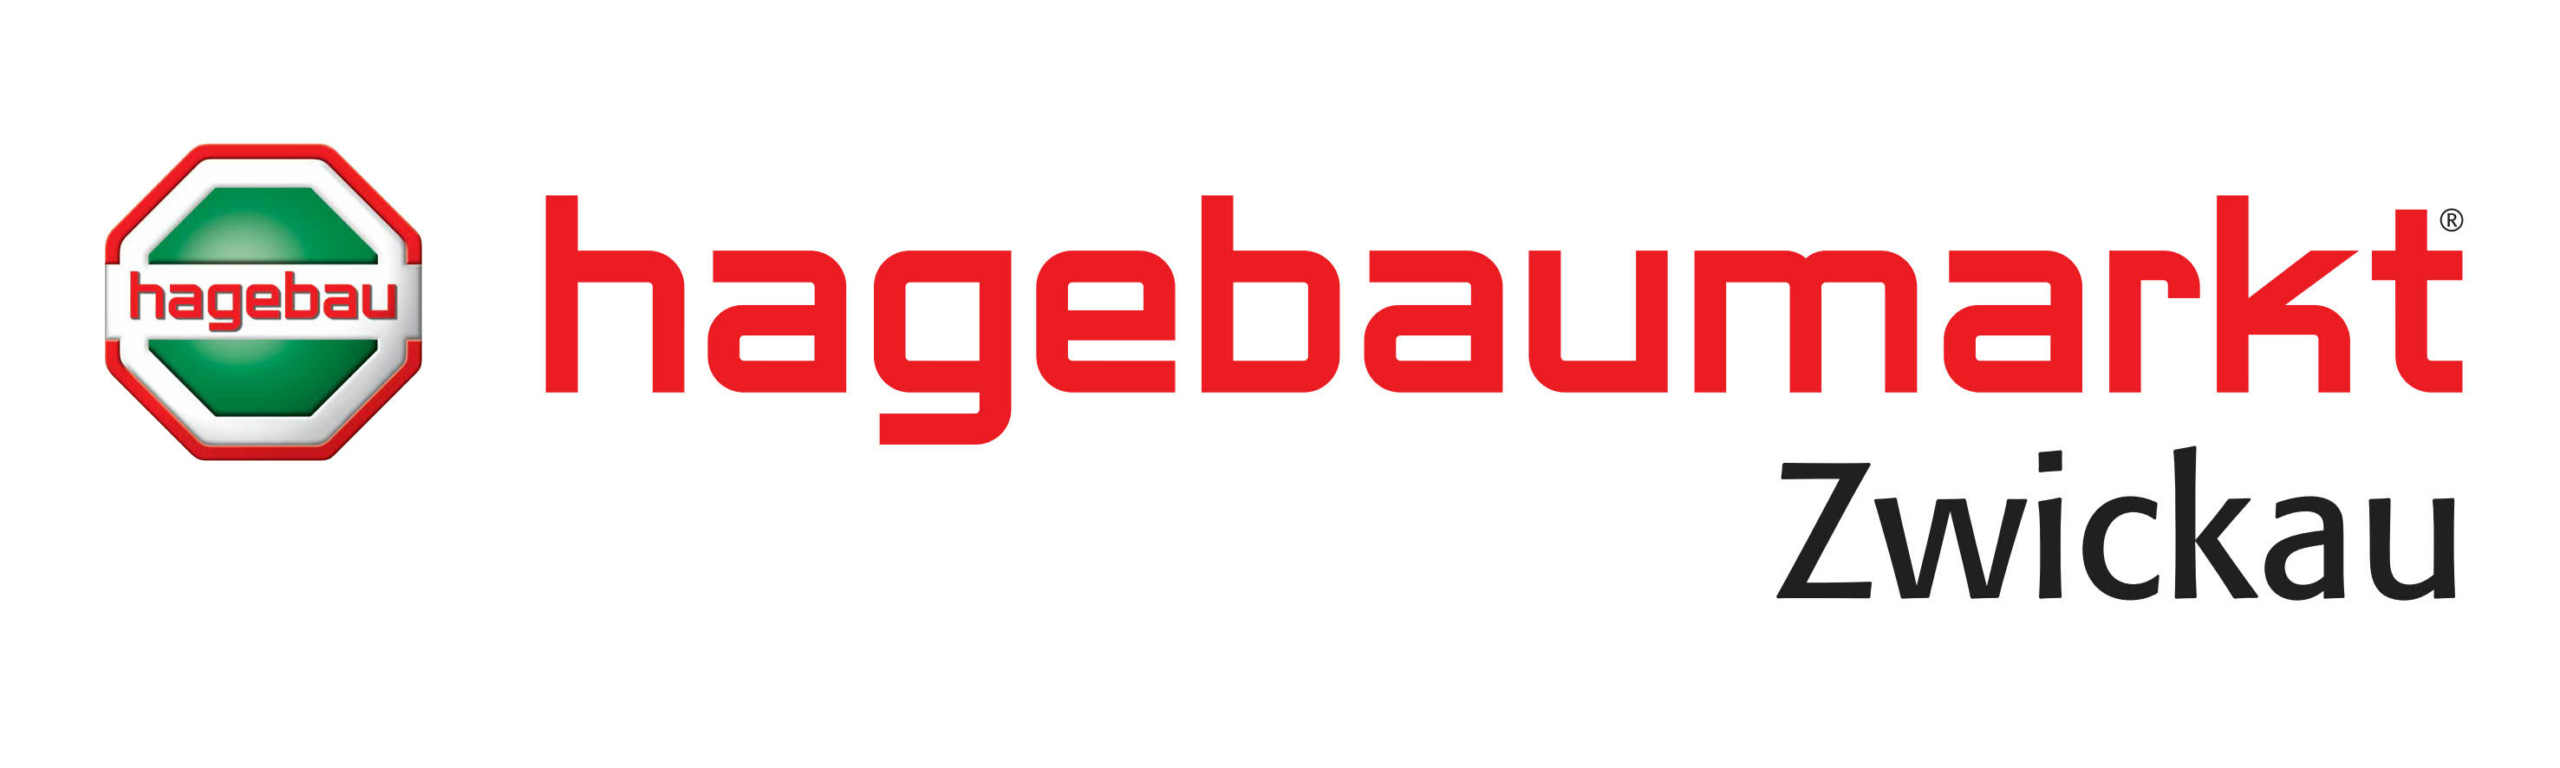 hagebaumarkt logo